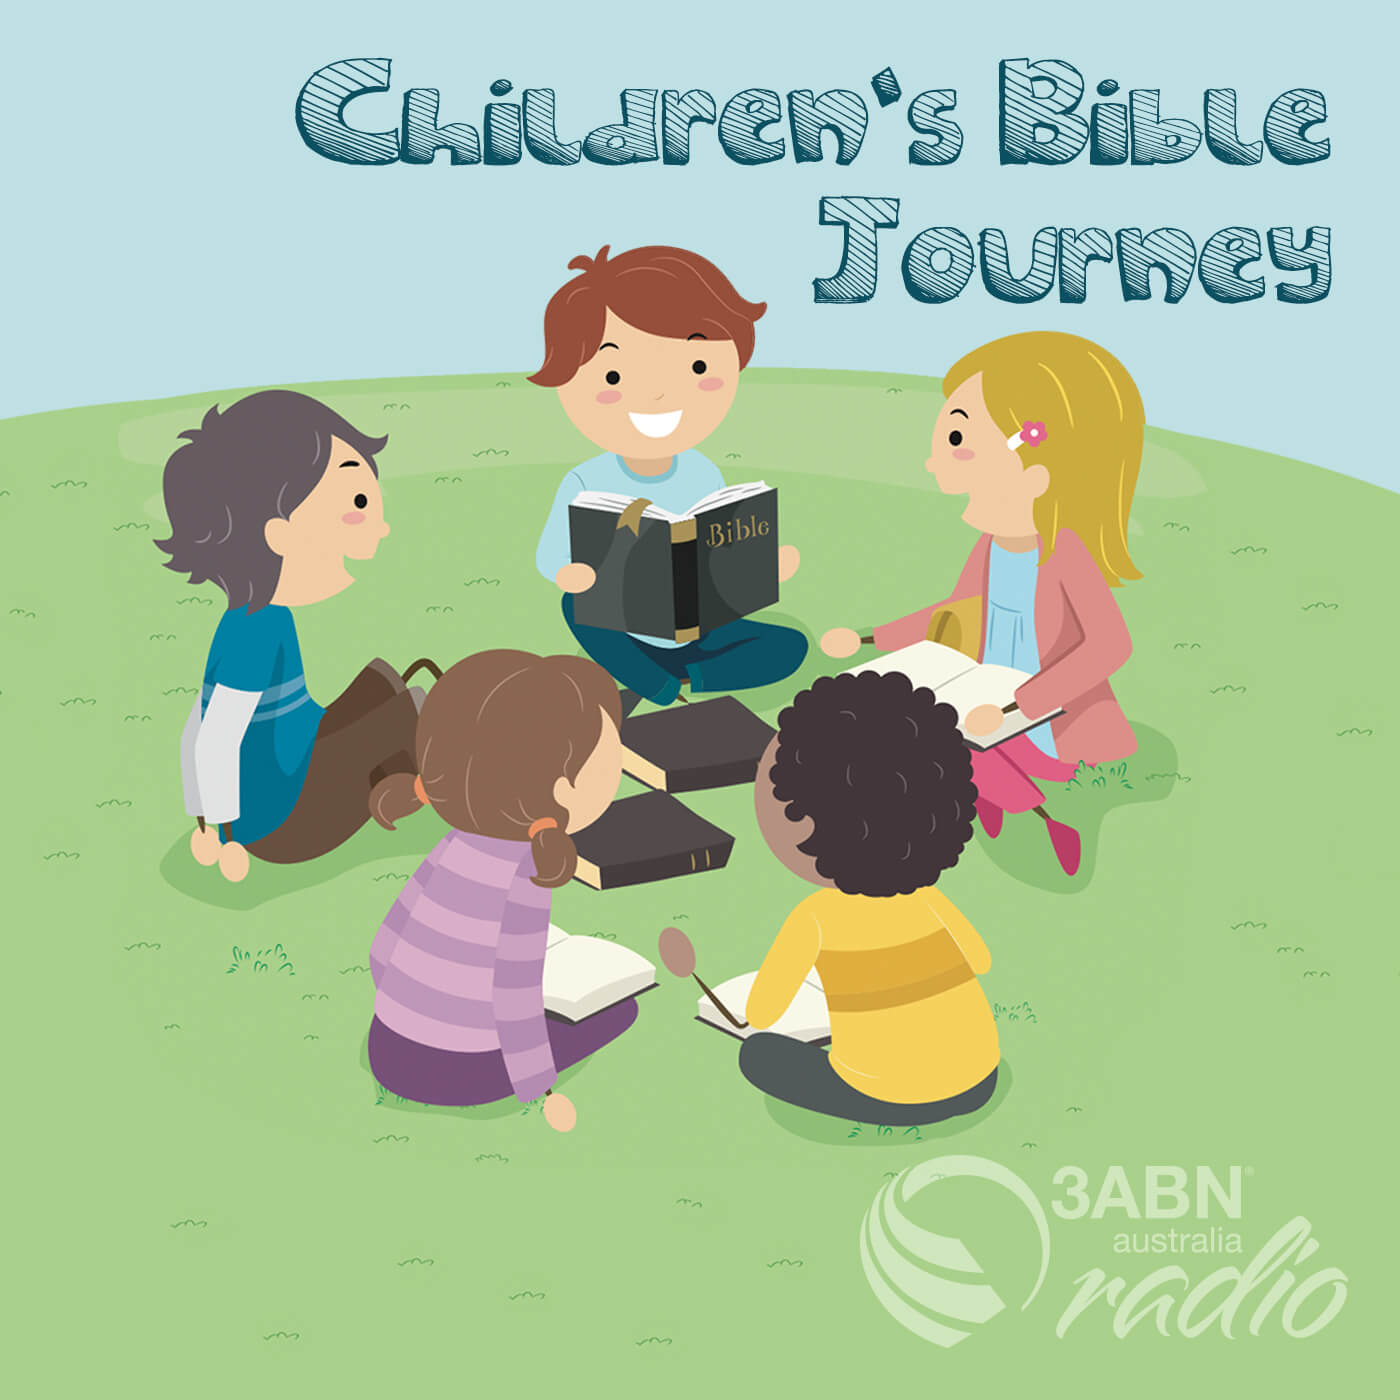 Children's Bible Journey - 2190